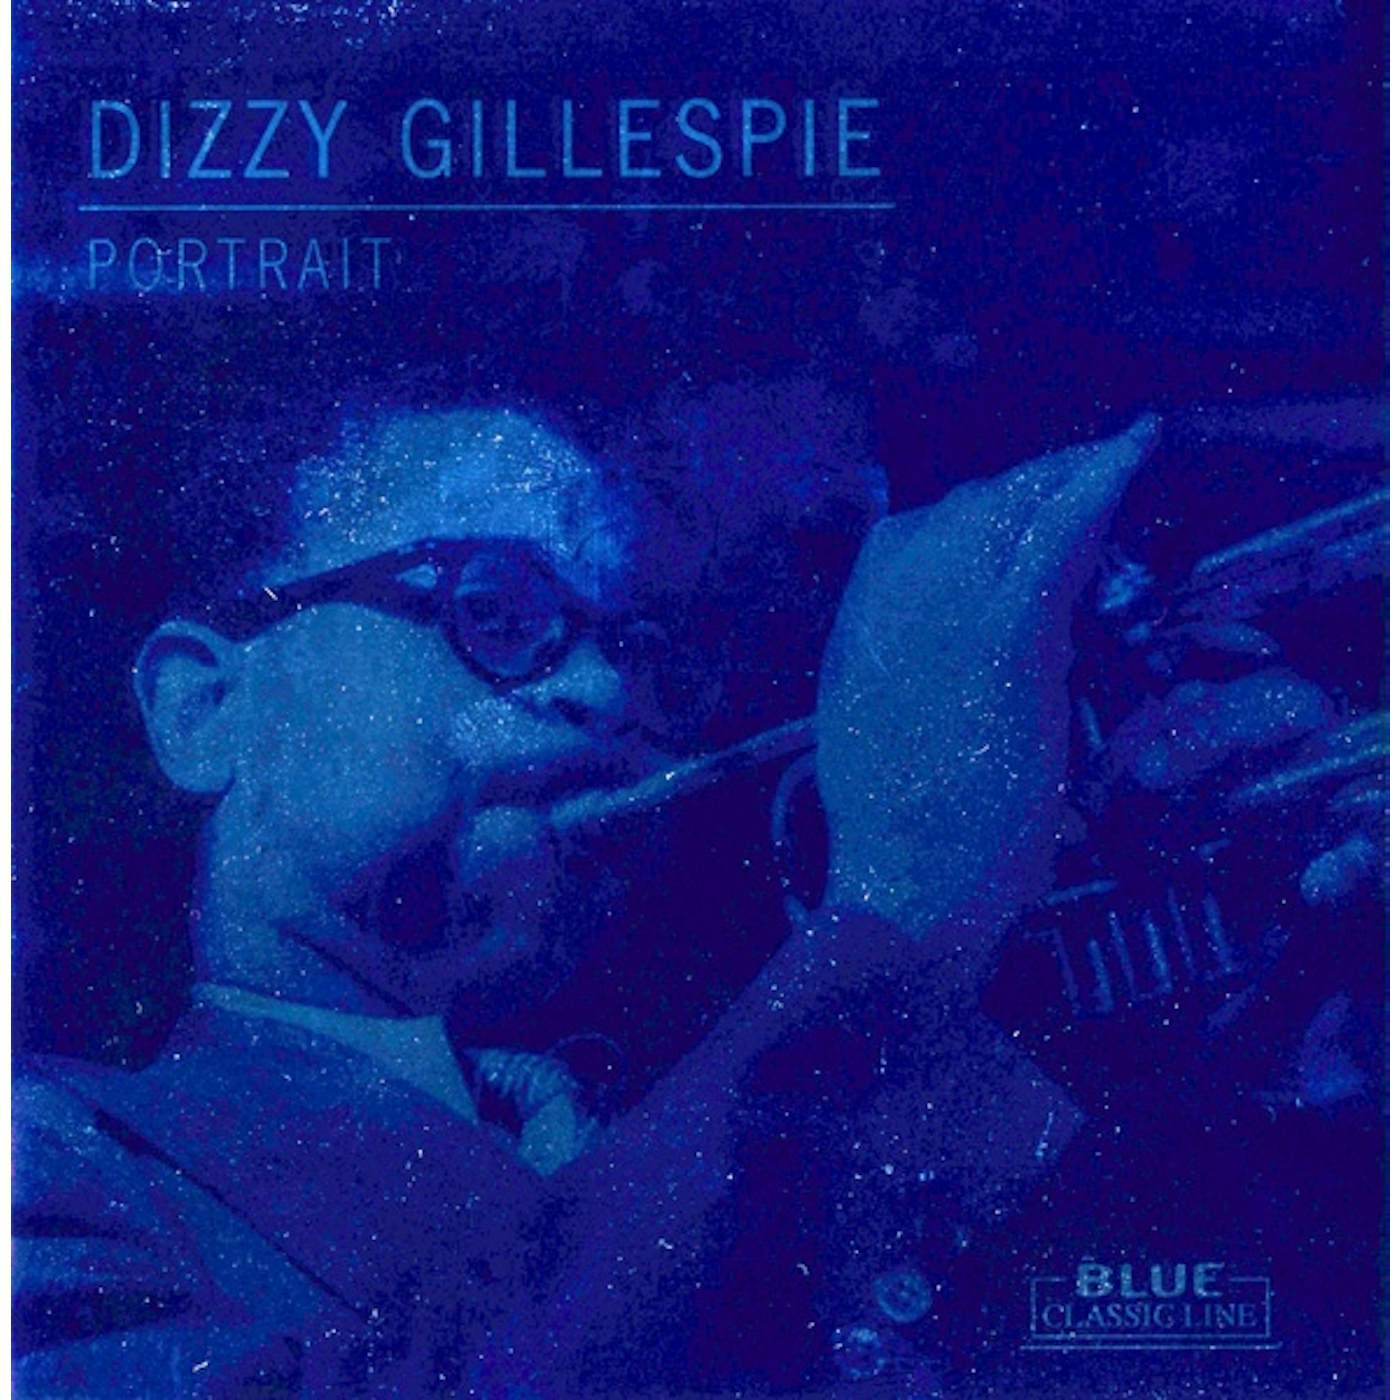 Dizzy Gillespie PORTRAIT Vinyl Record